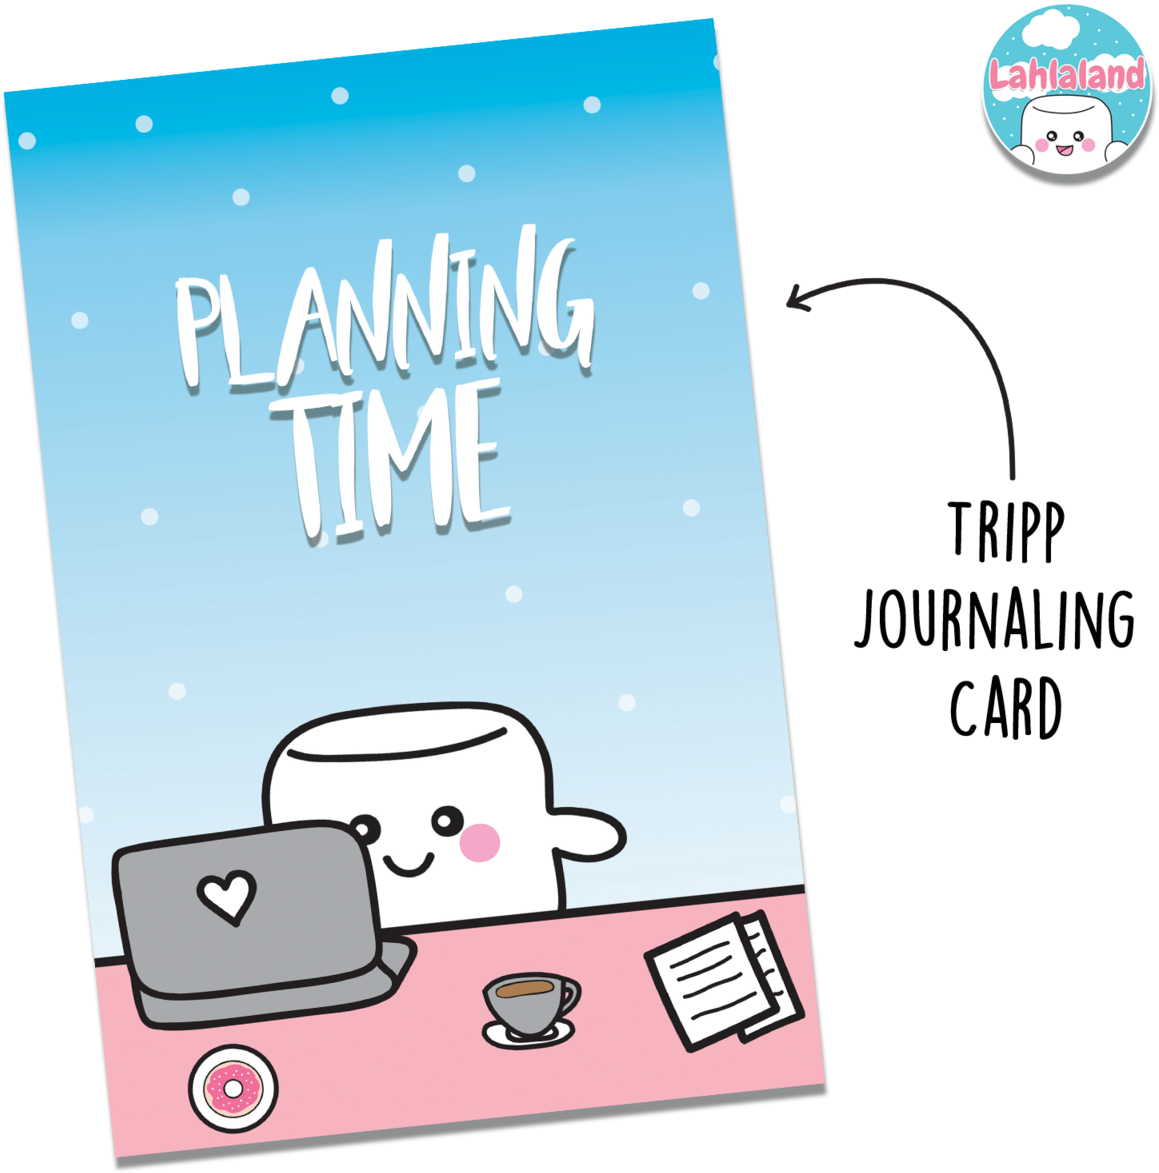 Planning Time Journaling Card - Planning Time Journaling Card (1200x1200)